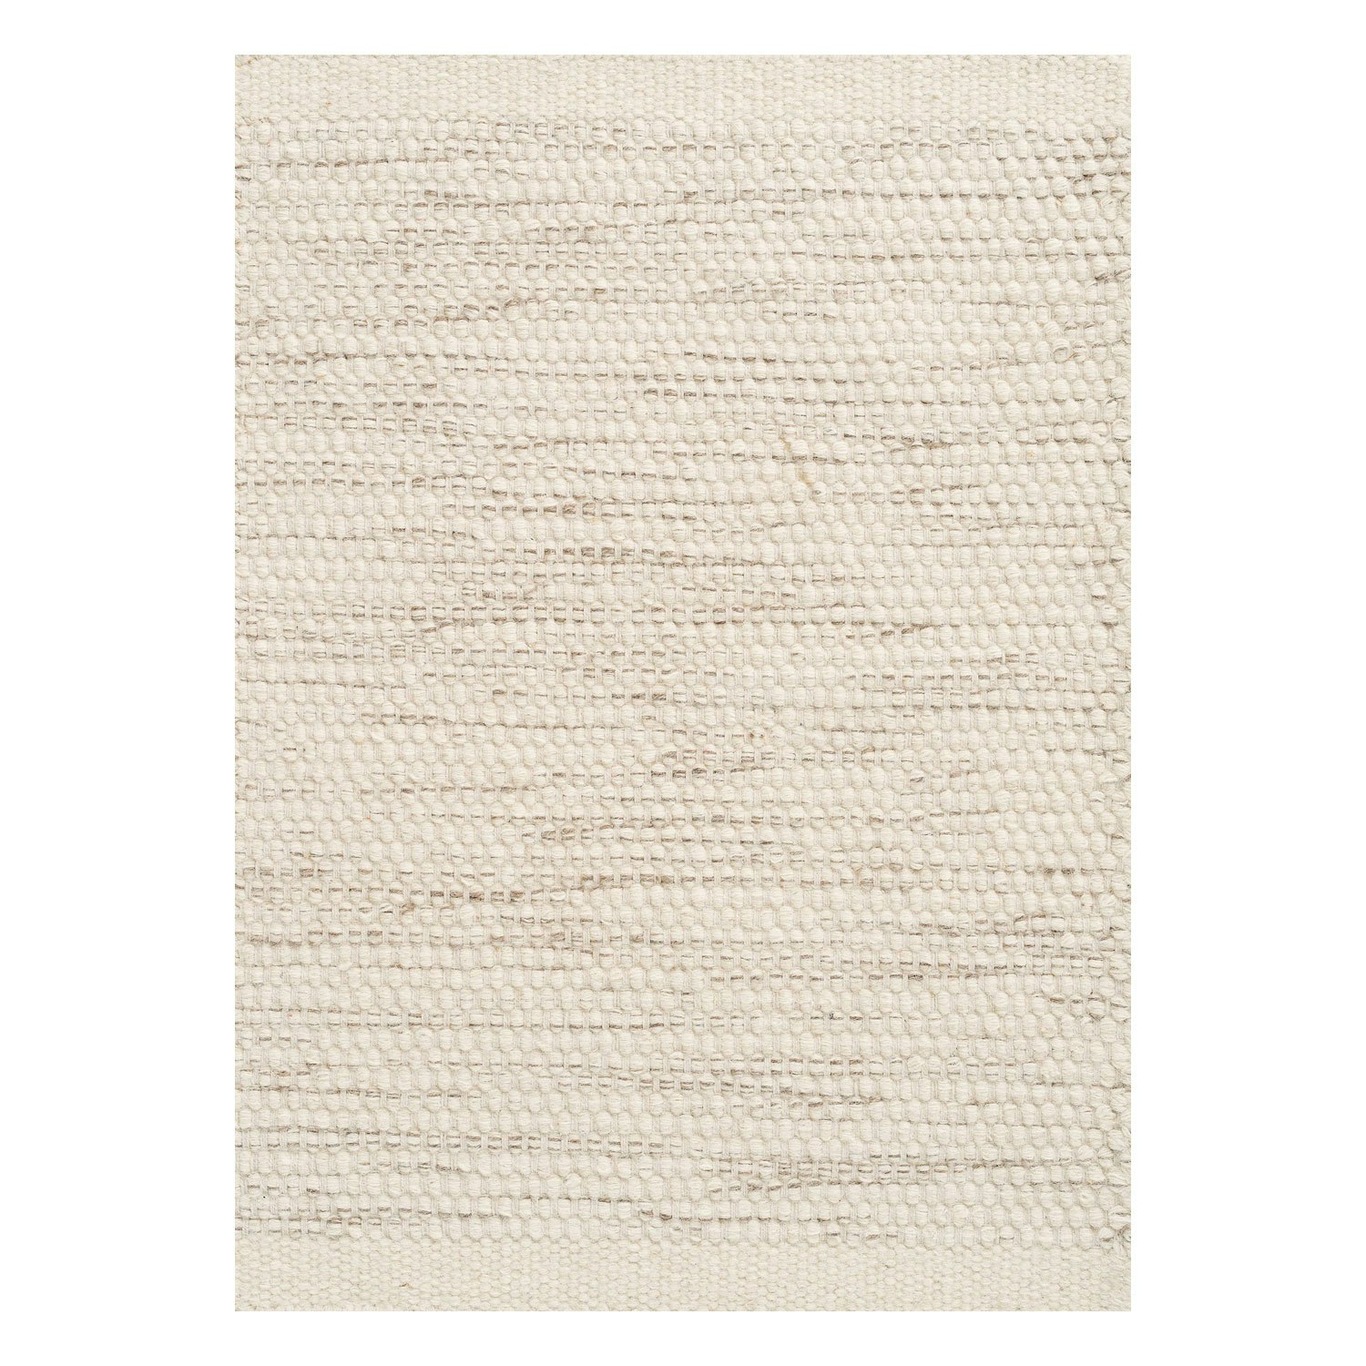 Asko Teppich Off-white, 200x300 cm